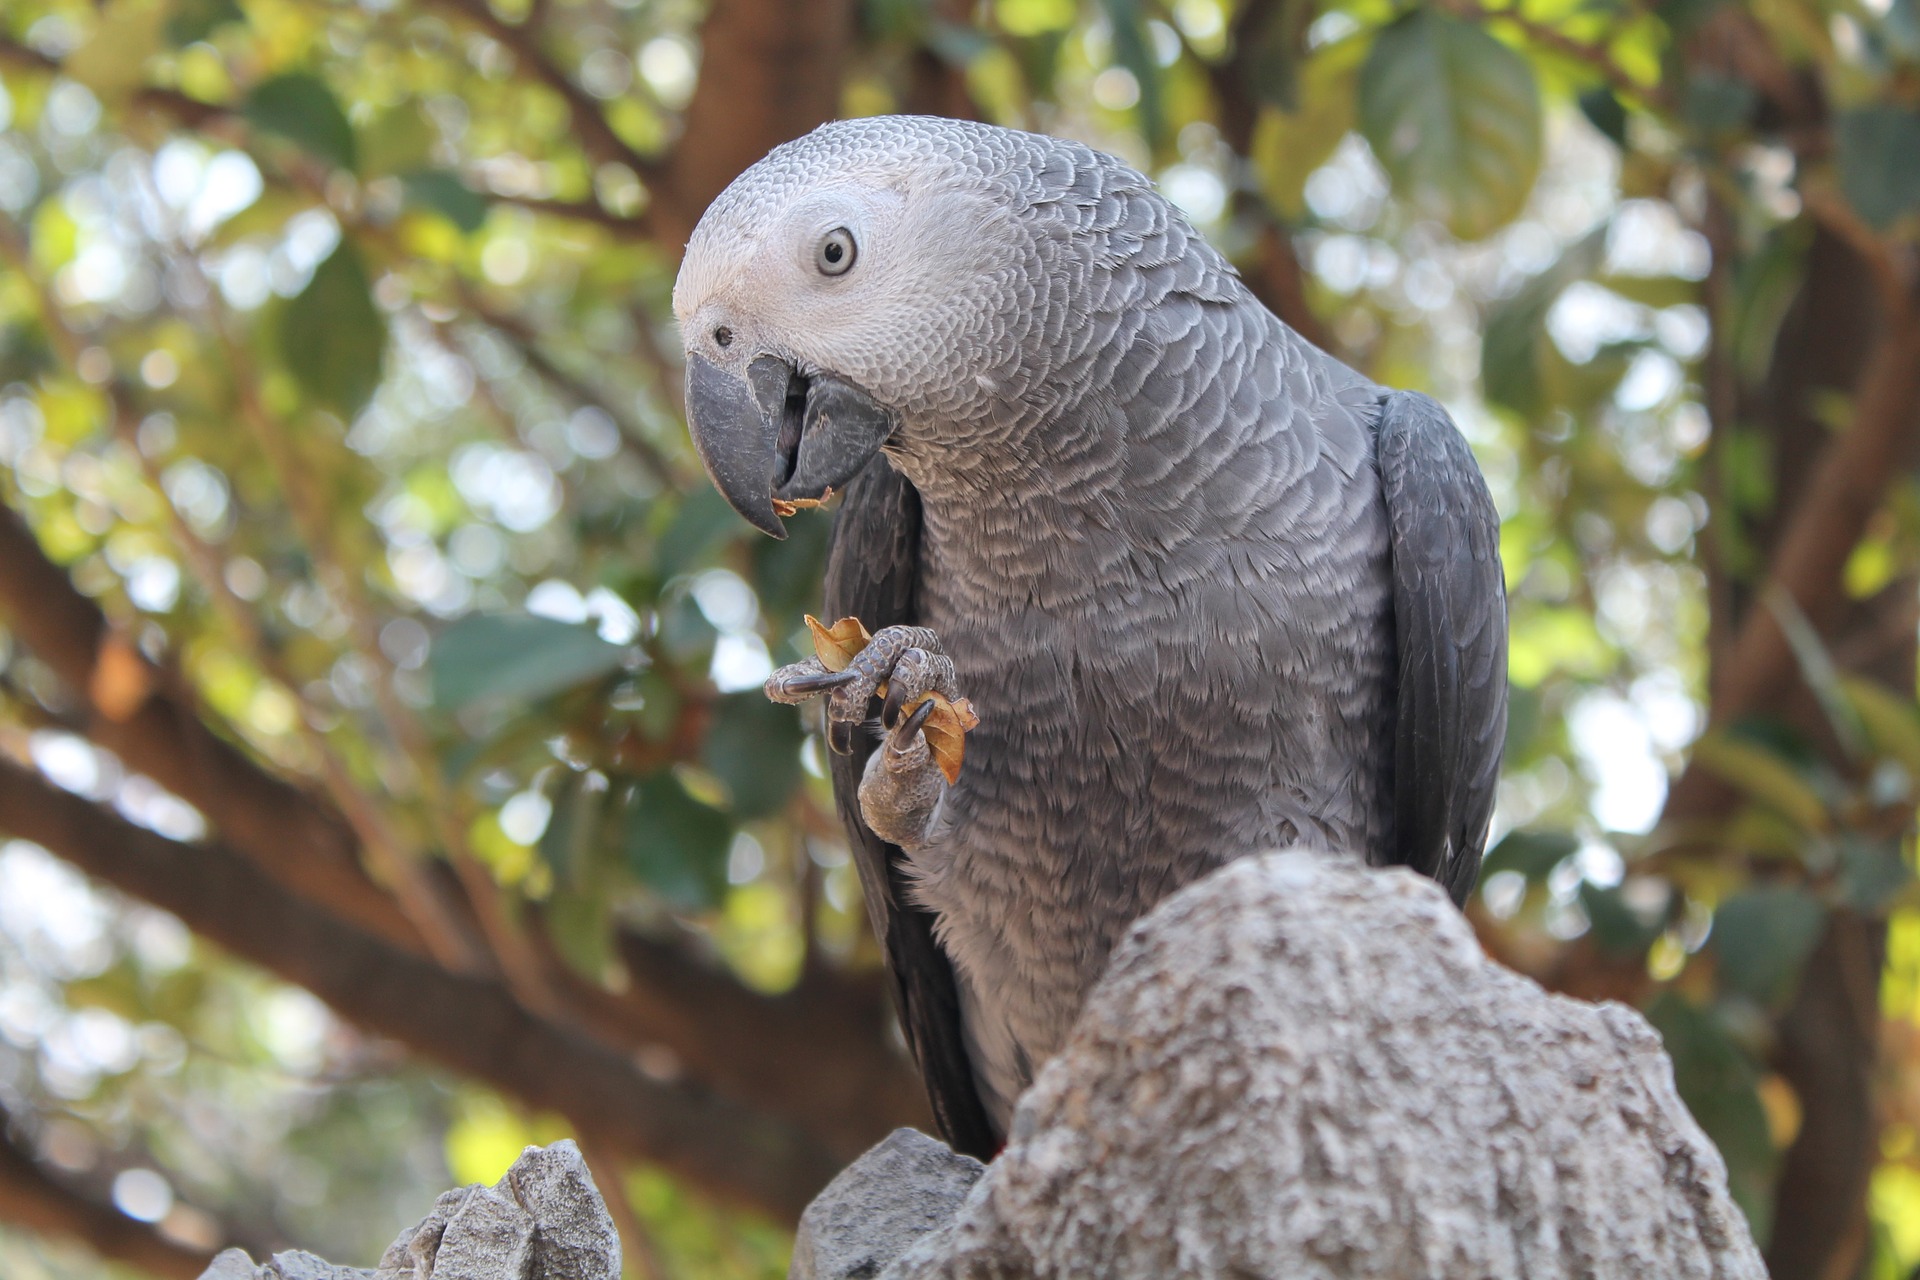 “Sir Parrot”, papagalul care și-a pierdut accentul